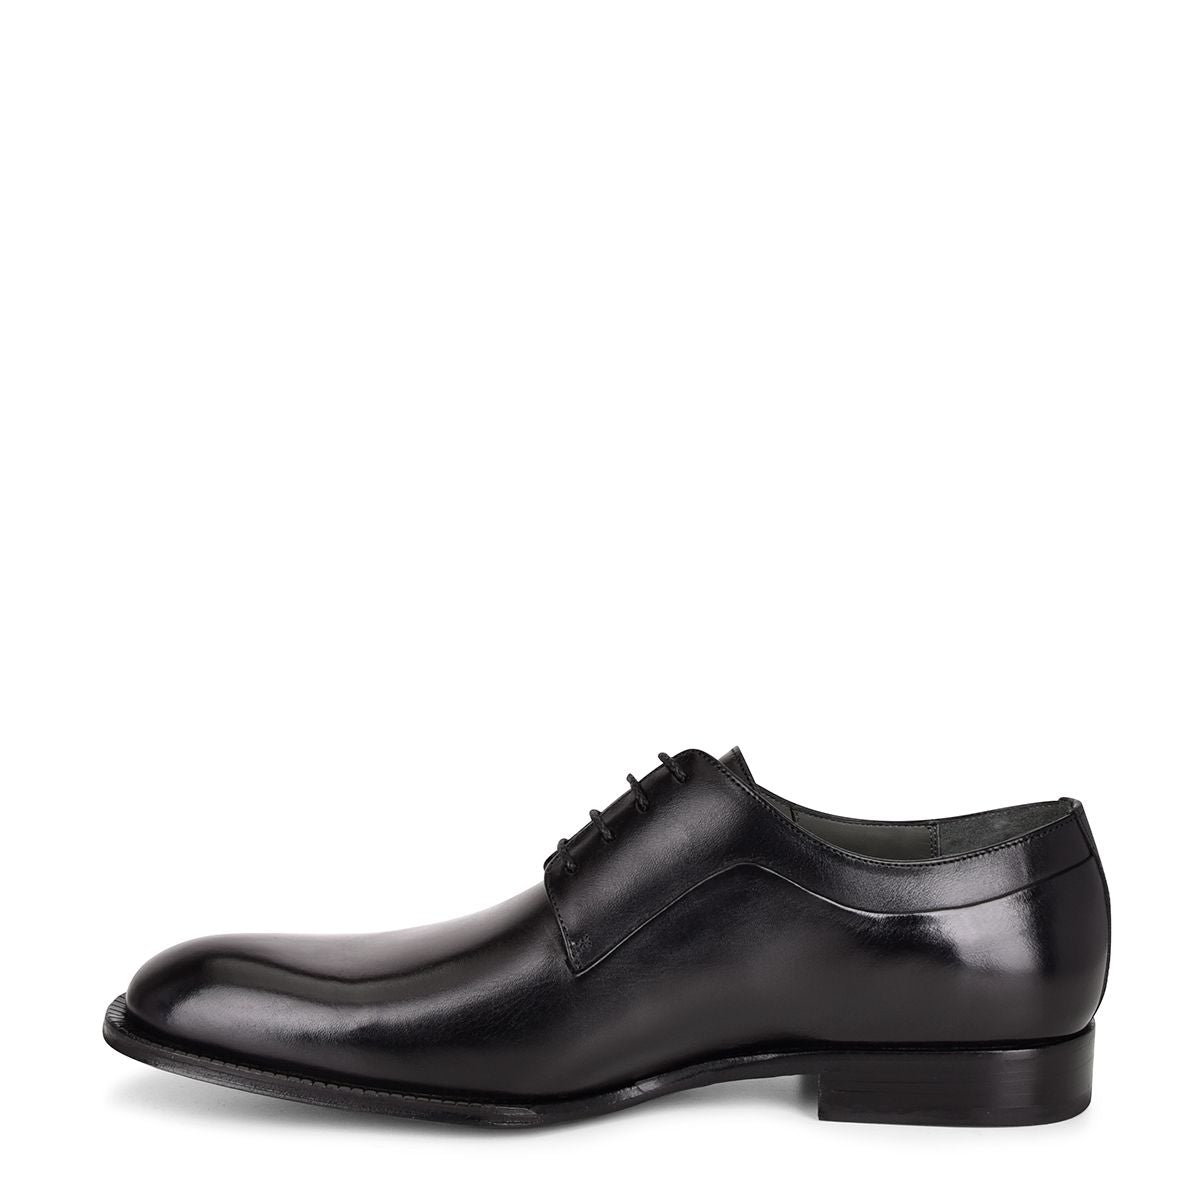 62FBSBS - Cuadra black classic dress leather plain derby shoes for men-Kuet.us